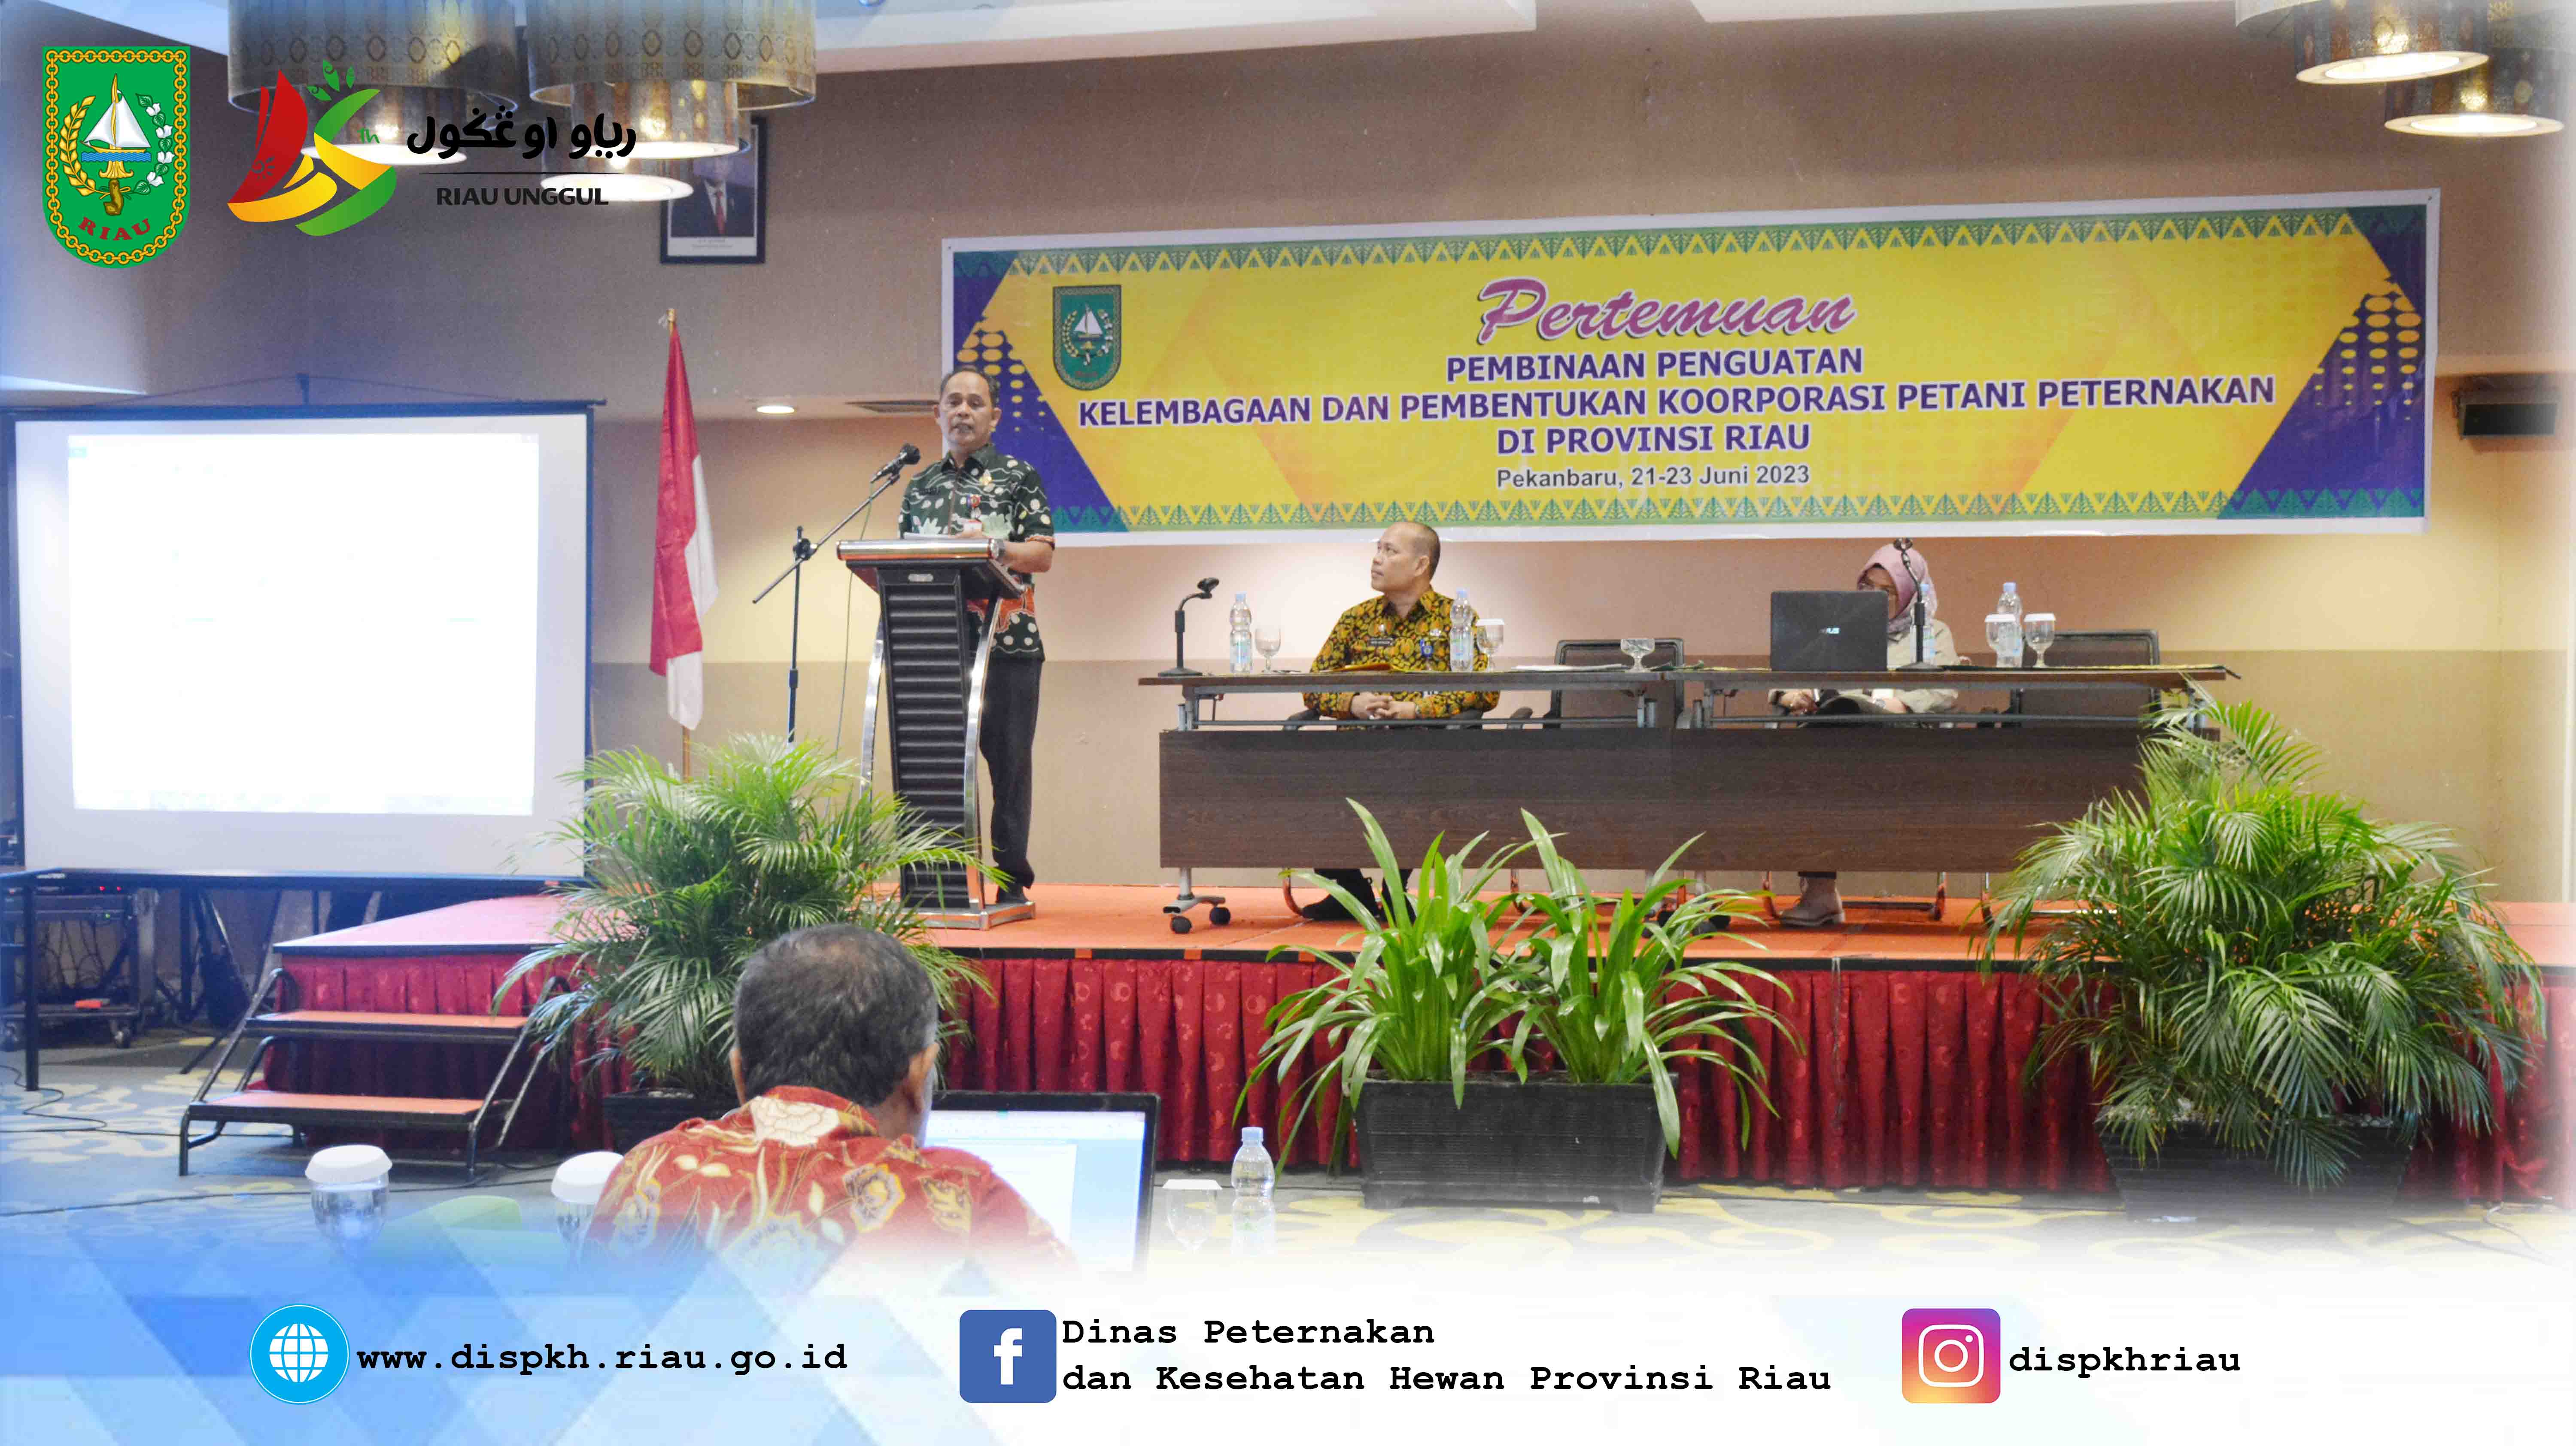 Pertemuan Pembinaan Penguatan Kelembagaan dan Pembentukan Koorporasi Petani Peternakan di Provinsi Riau.